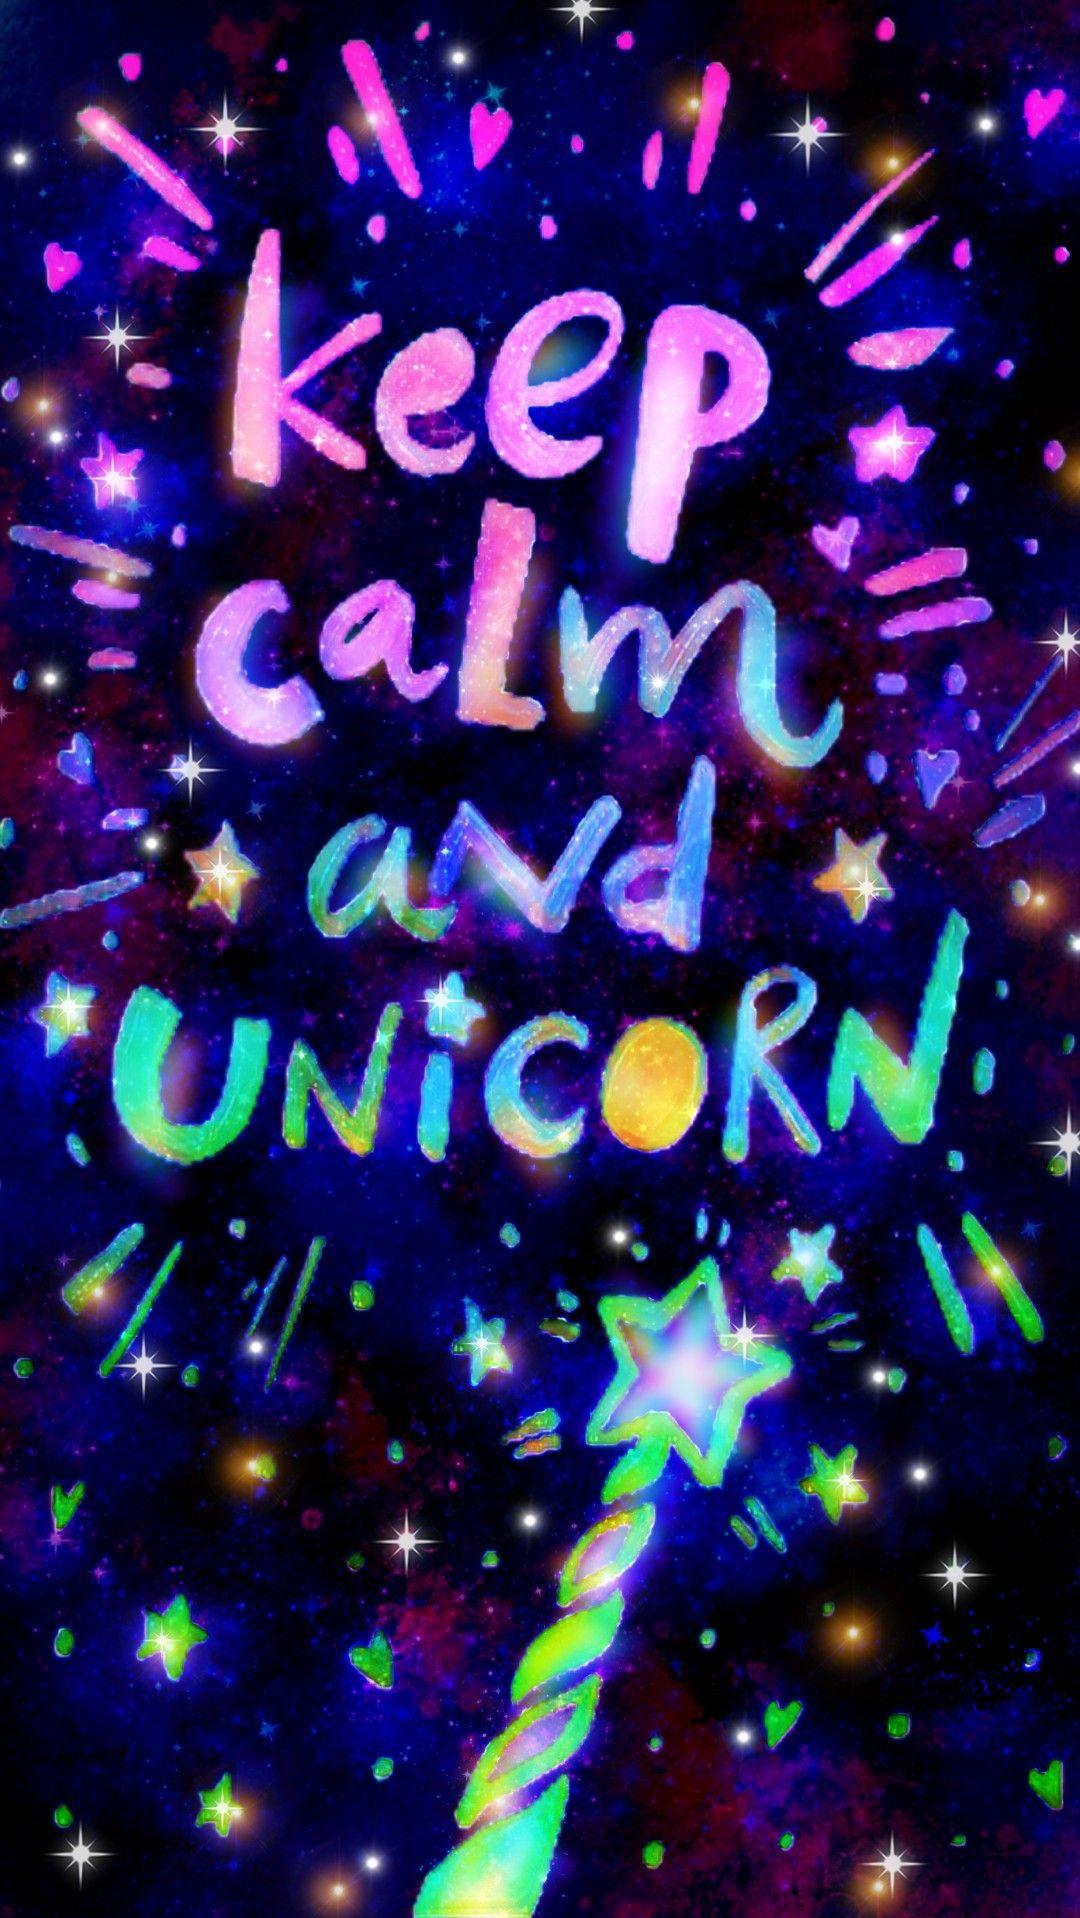 Keep Calm Unicorn Galaxy, made by me #unicorn #fantasy #rainbow